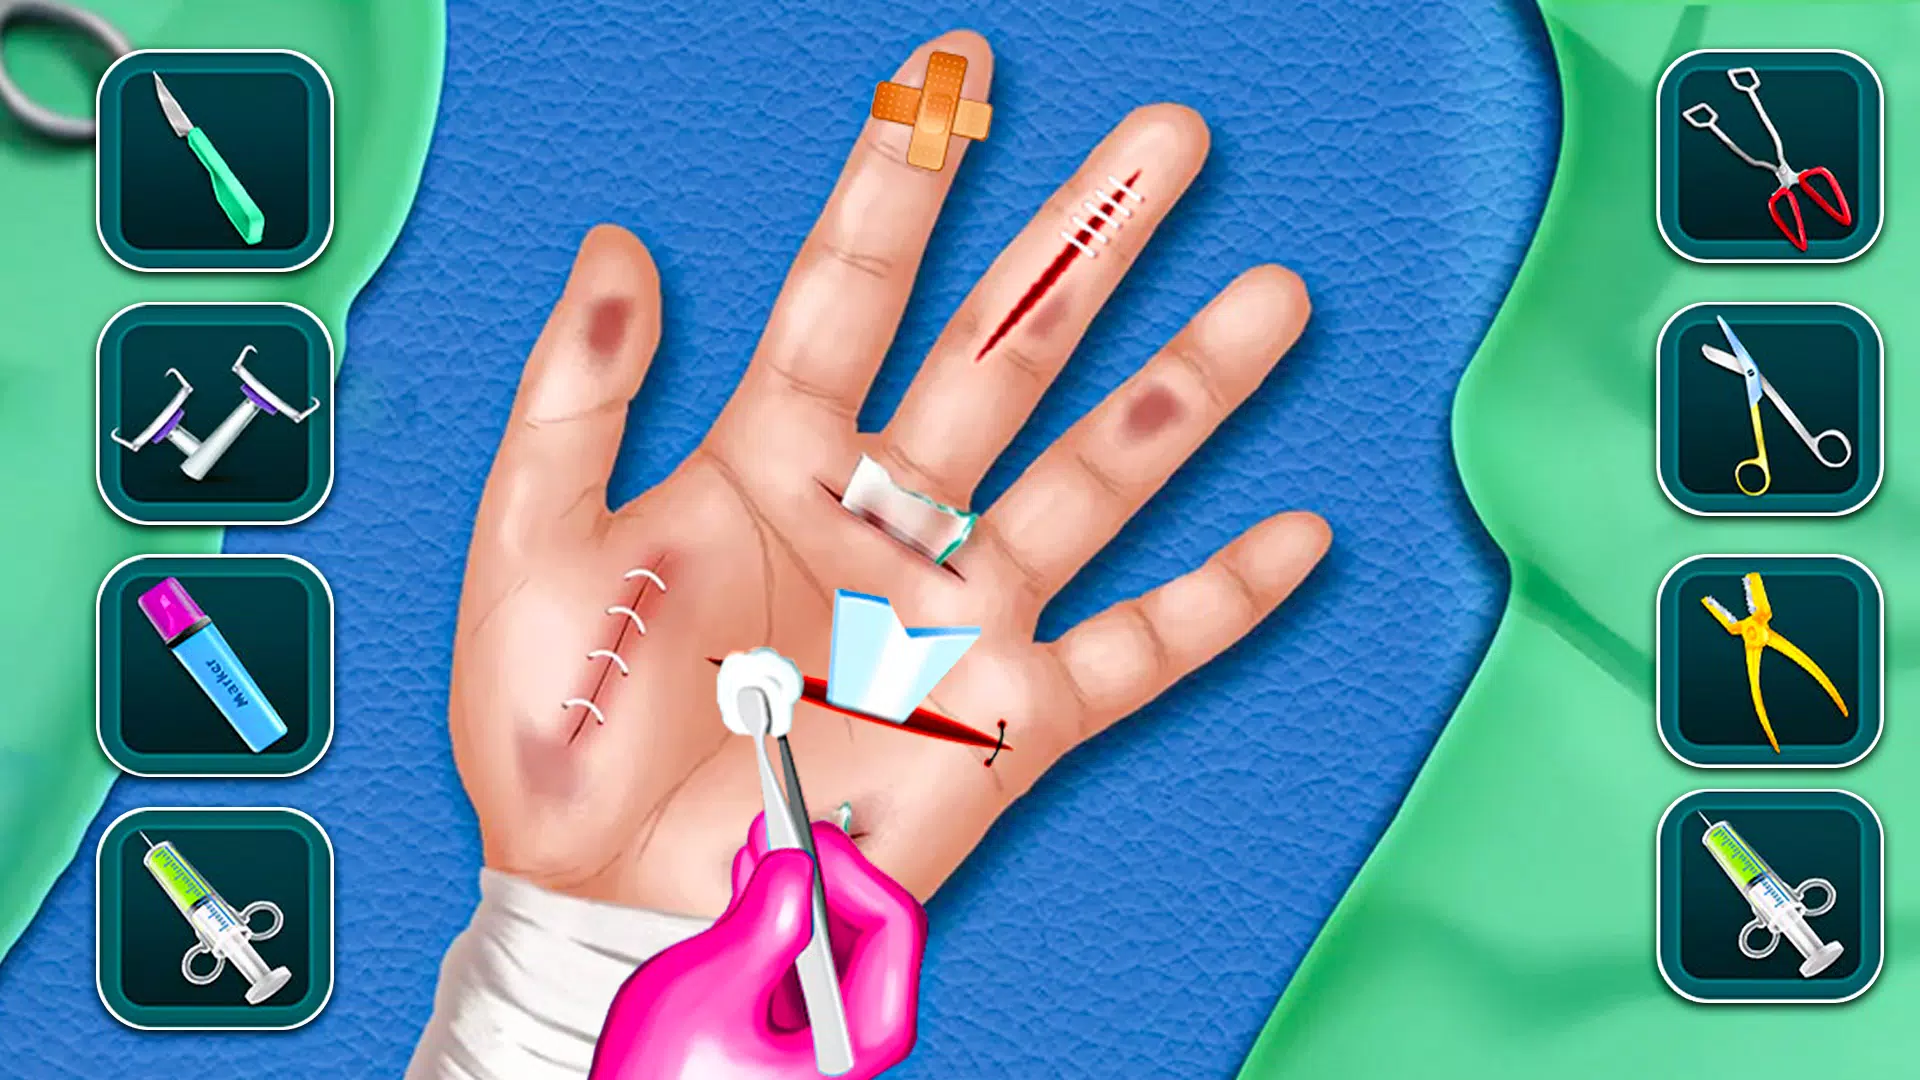 Download do APK de Jogos de Cirurgia Hospitalar para Android